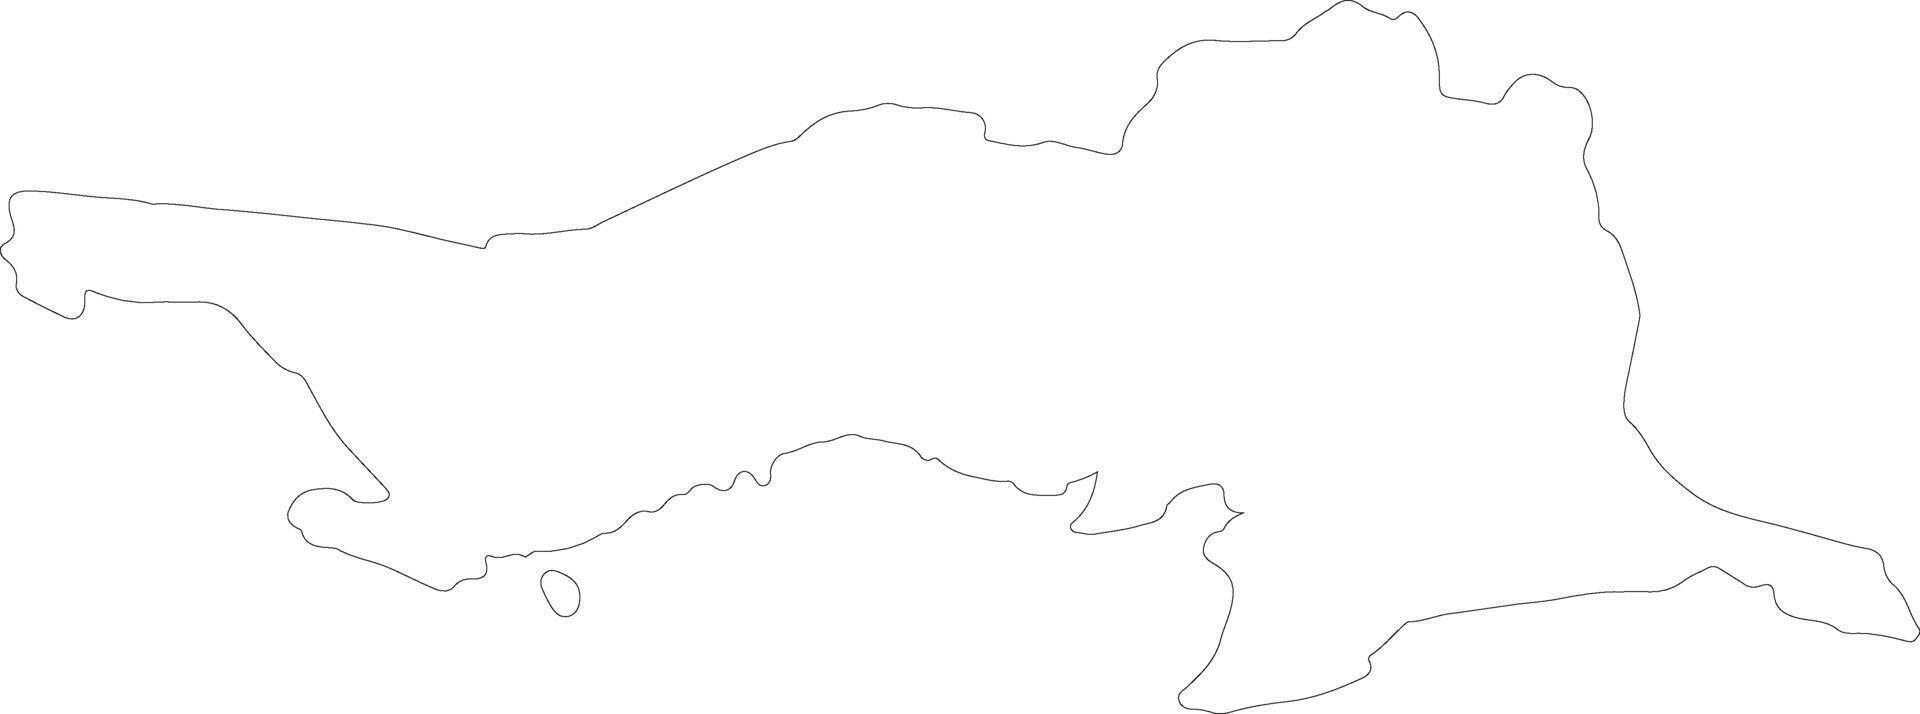 Atyrau Kazakhstan outline map vector